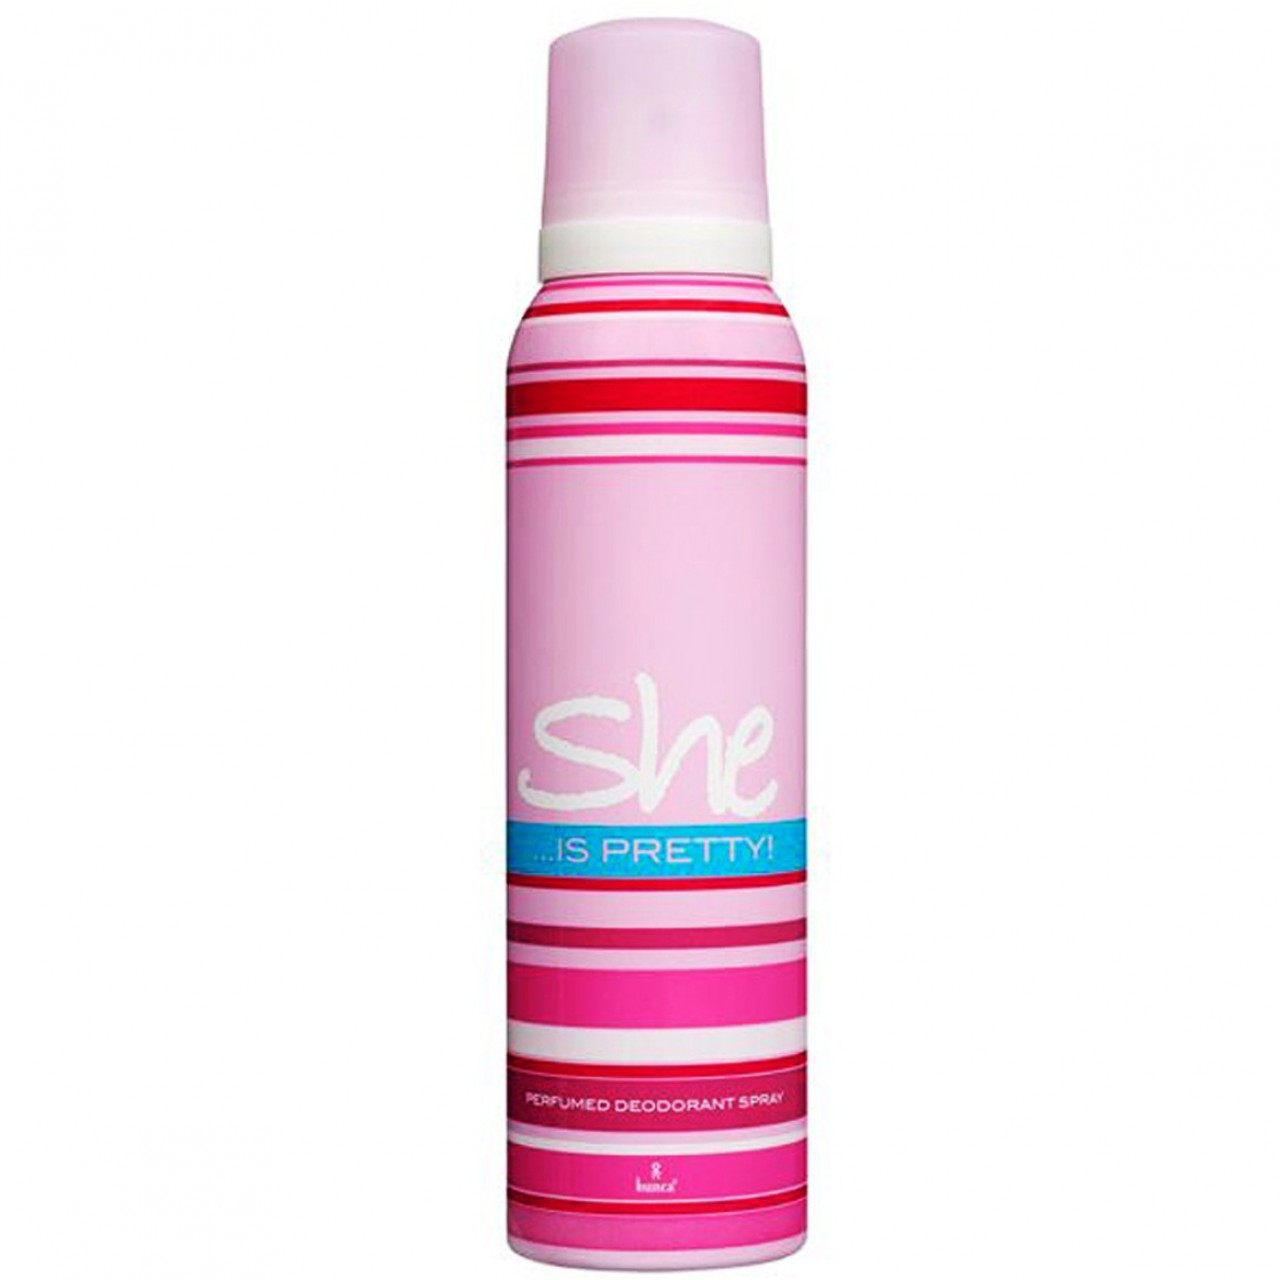 She is Pretty Body Spray Deodorant - 200 ml - Pink